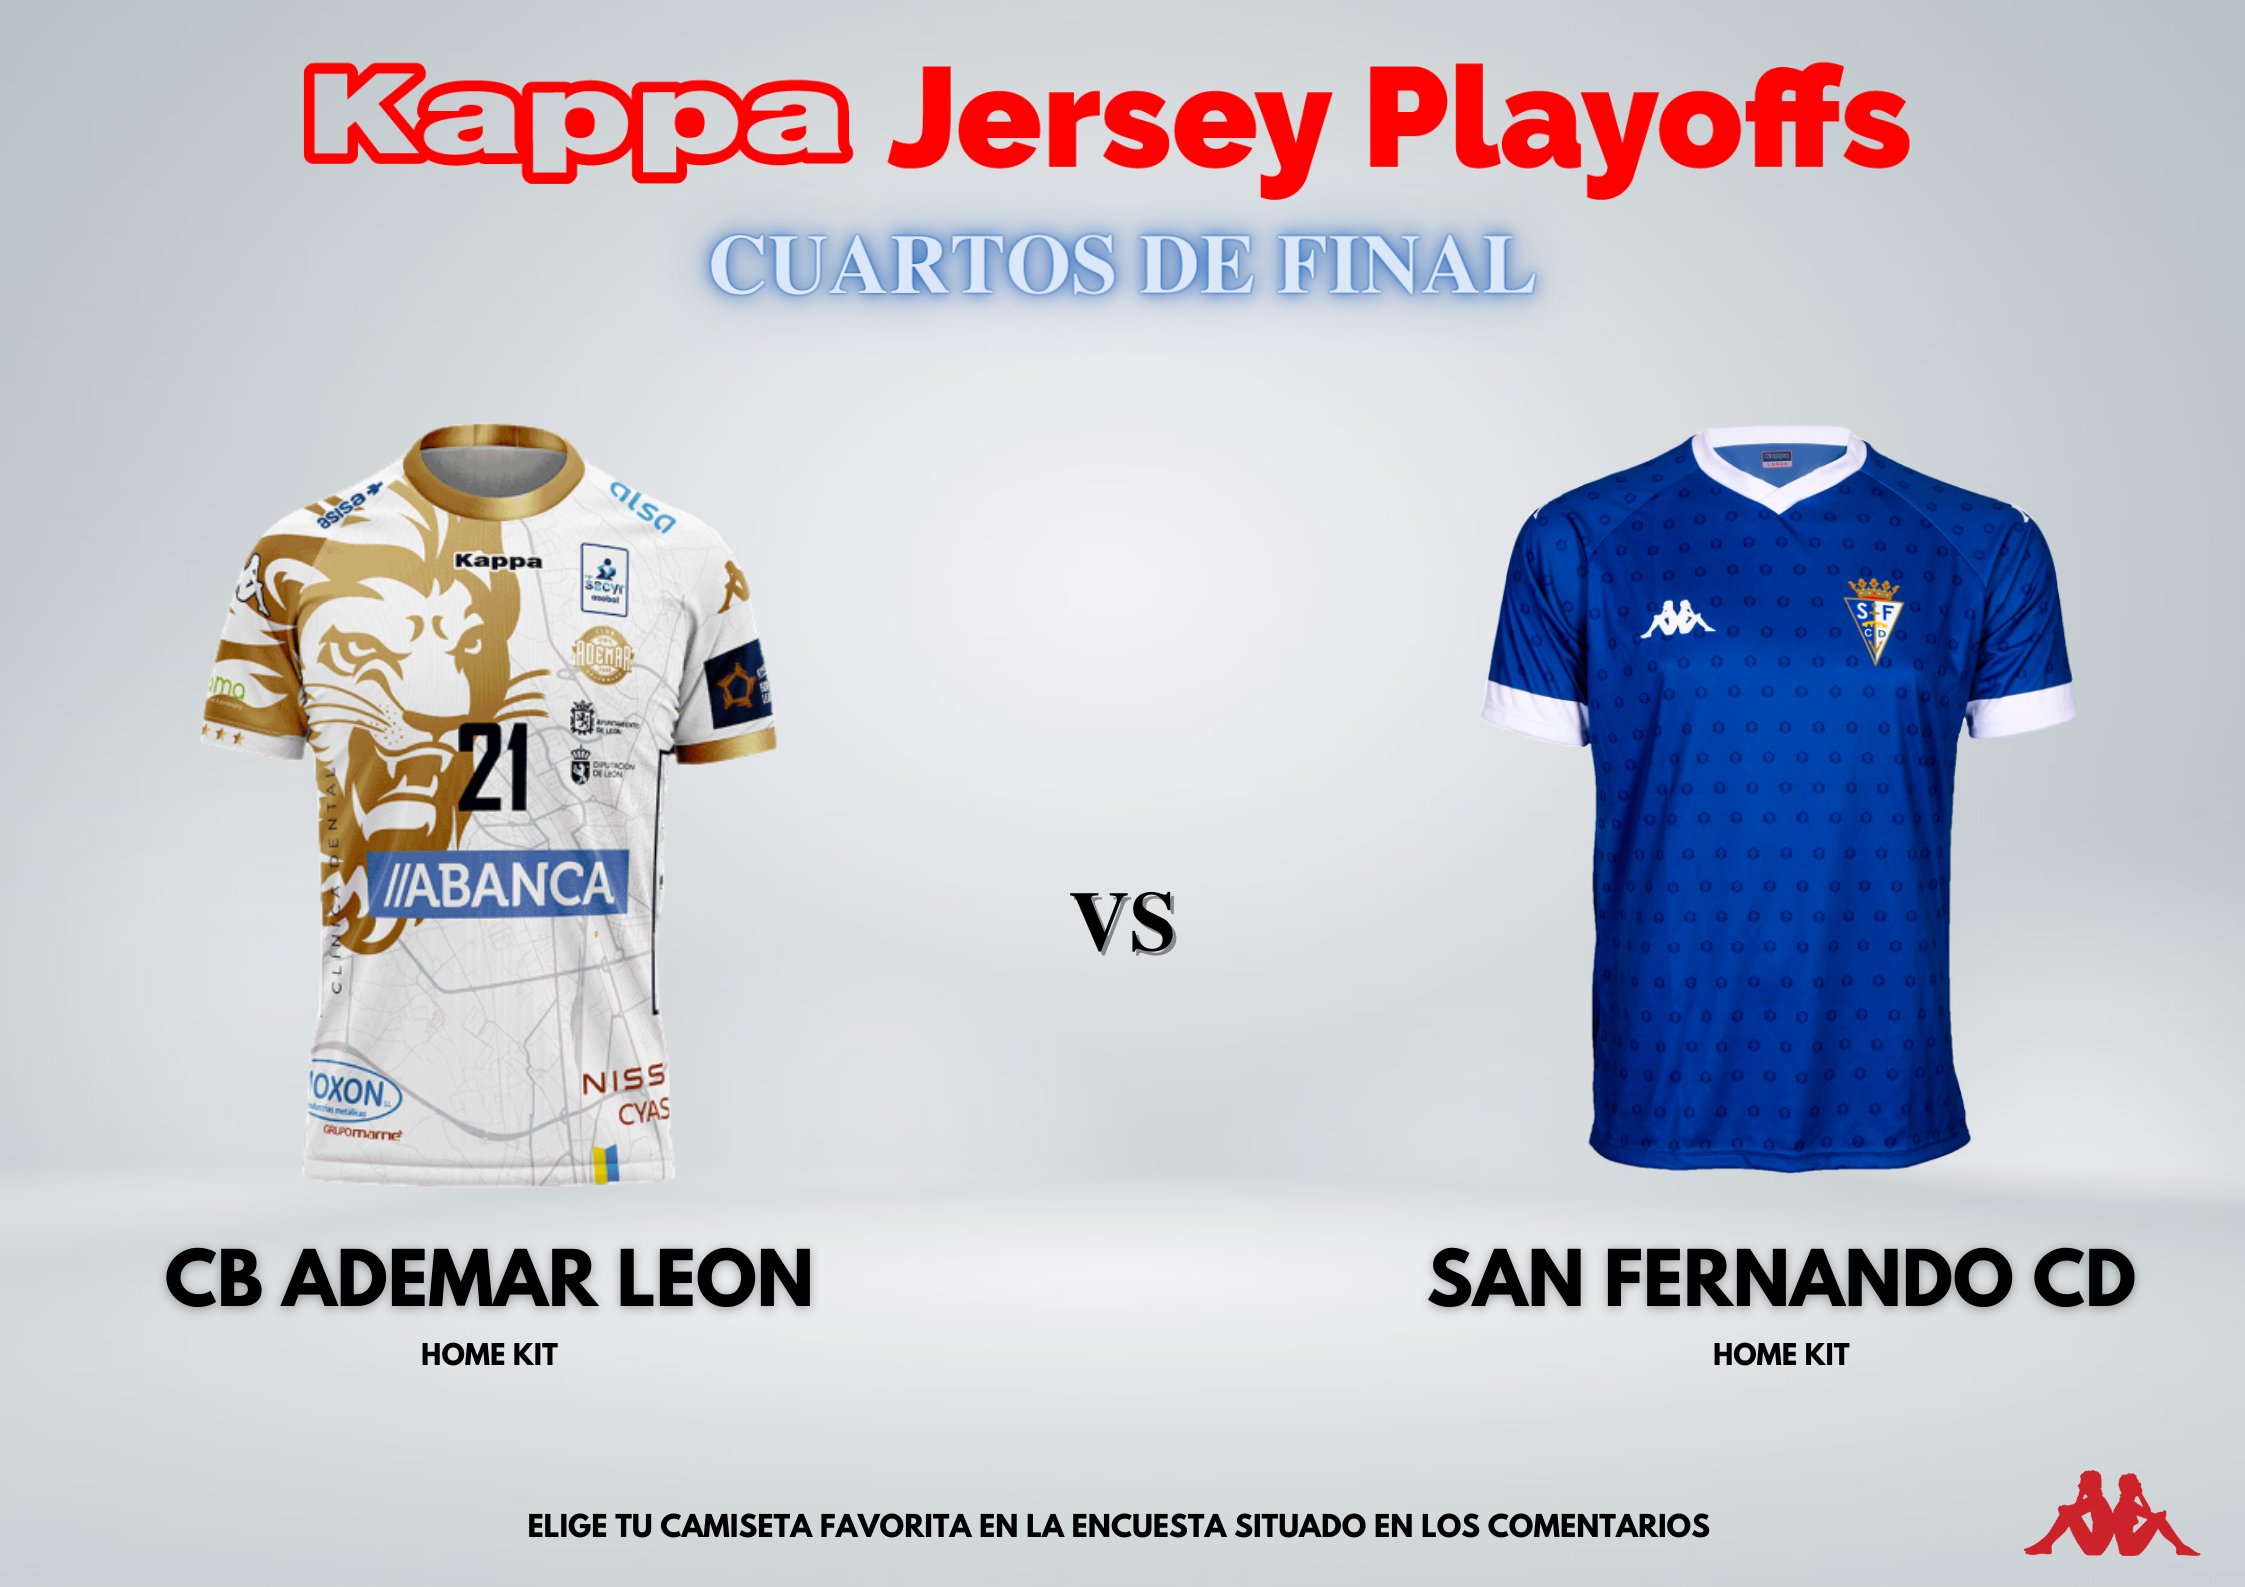 Kappa Iberia on Twitter: #KAPPAJerseyPlayoffs📢 CUARTOS DE FINAL: @ ADEMARLEON 🆚 @SanFernando_CD ⬇️ ¡Ahora te toca elegir tu camiseta #Kappa favorita en los comentarios! https://t.co/doySadQi6S" / Twitter